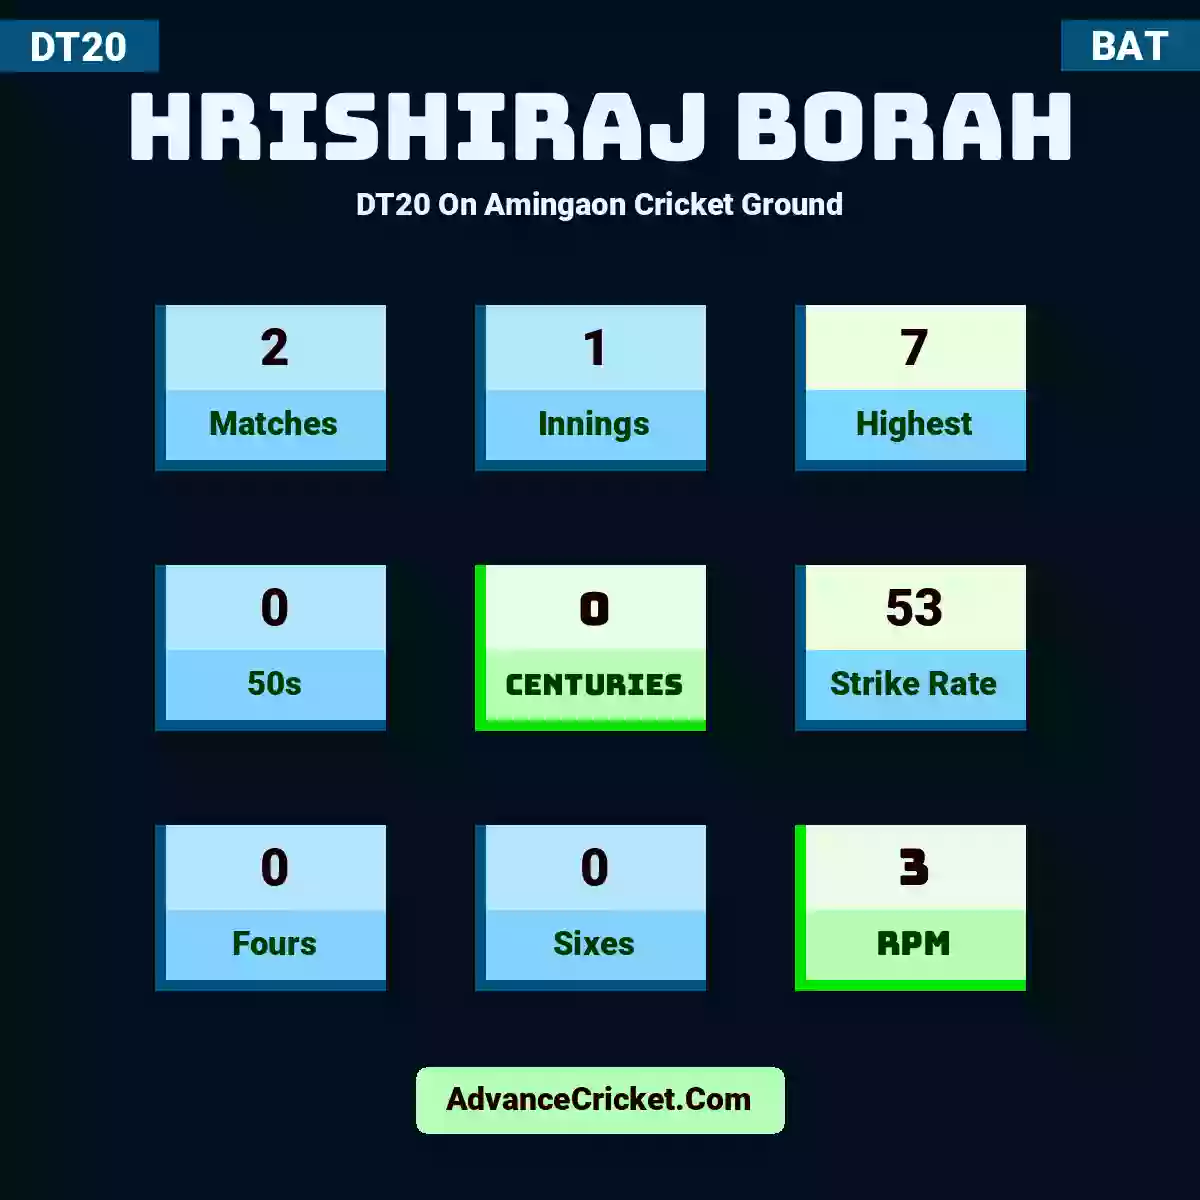 Hrishiraj Borah DT20  On Amingaon Cricket Ground, Hrishiraj Borah played 2 matches, scored 7 runs as highest, 0 half-centuries, and 0 centuries, with a strike rate of 53. H.Borah hit 0 fours and 0 sixes, with an RPM of 3.